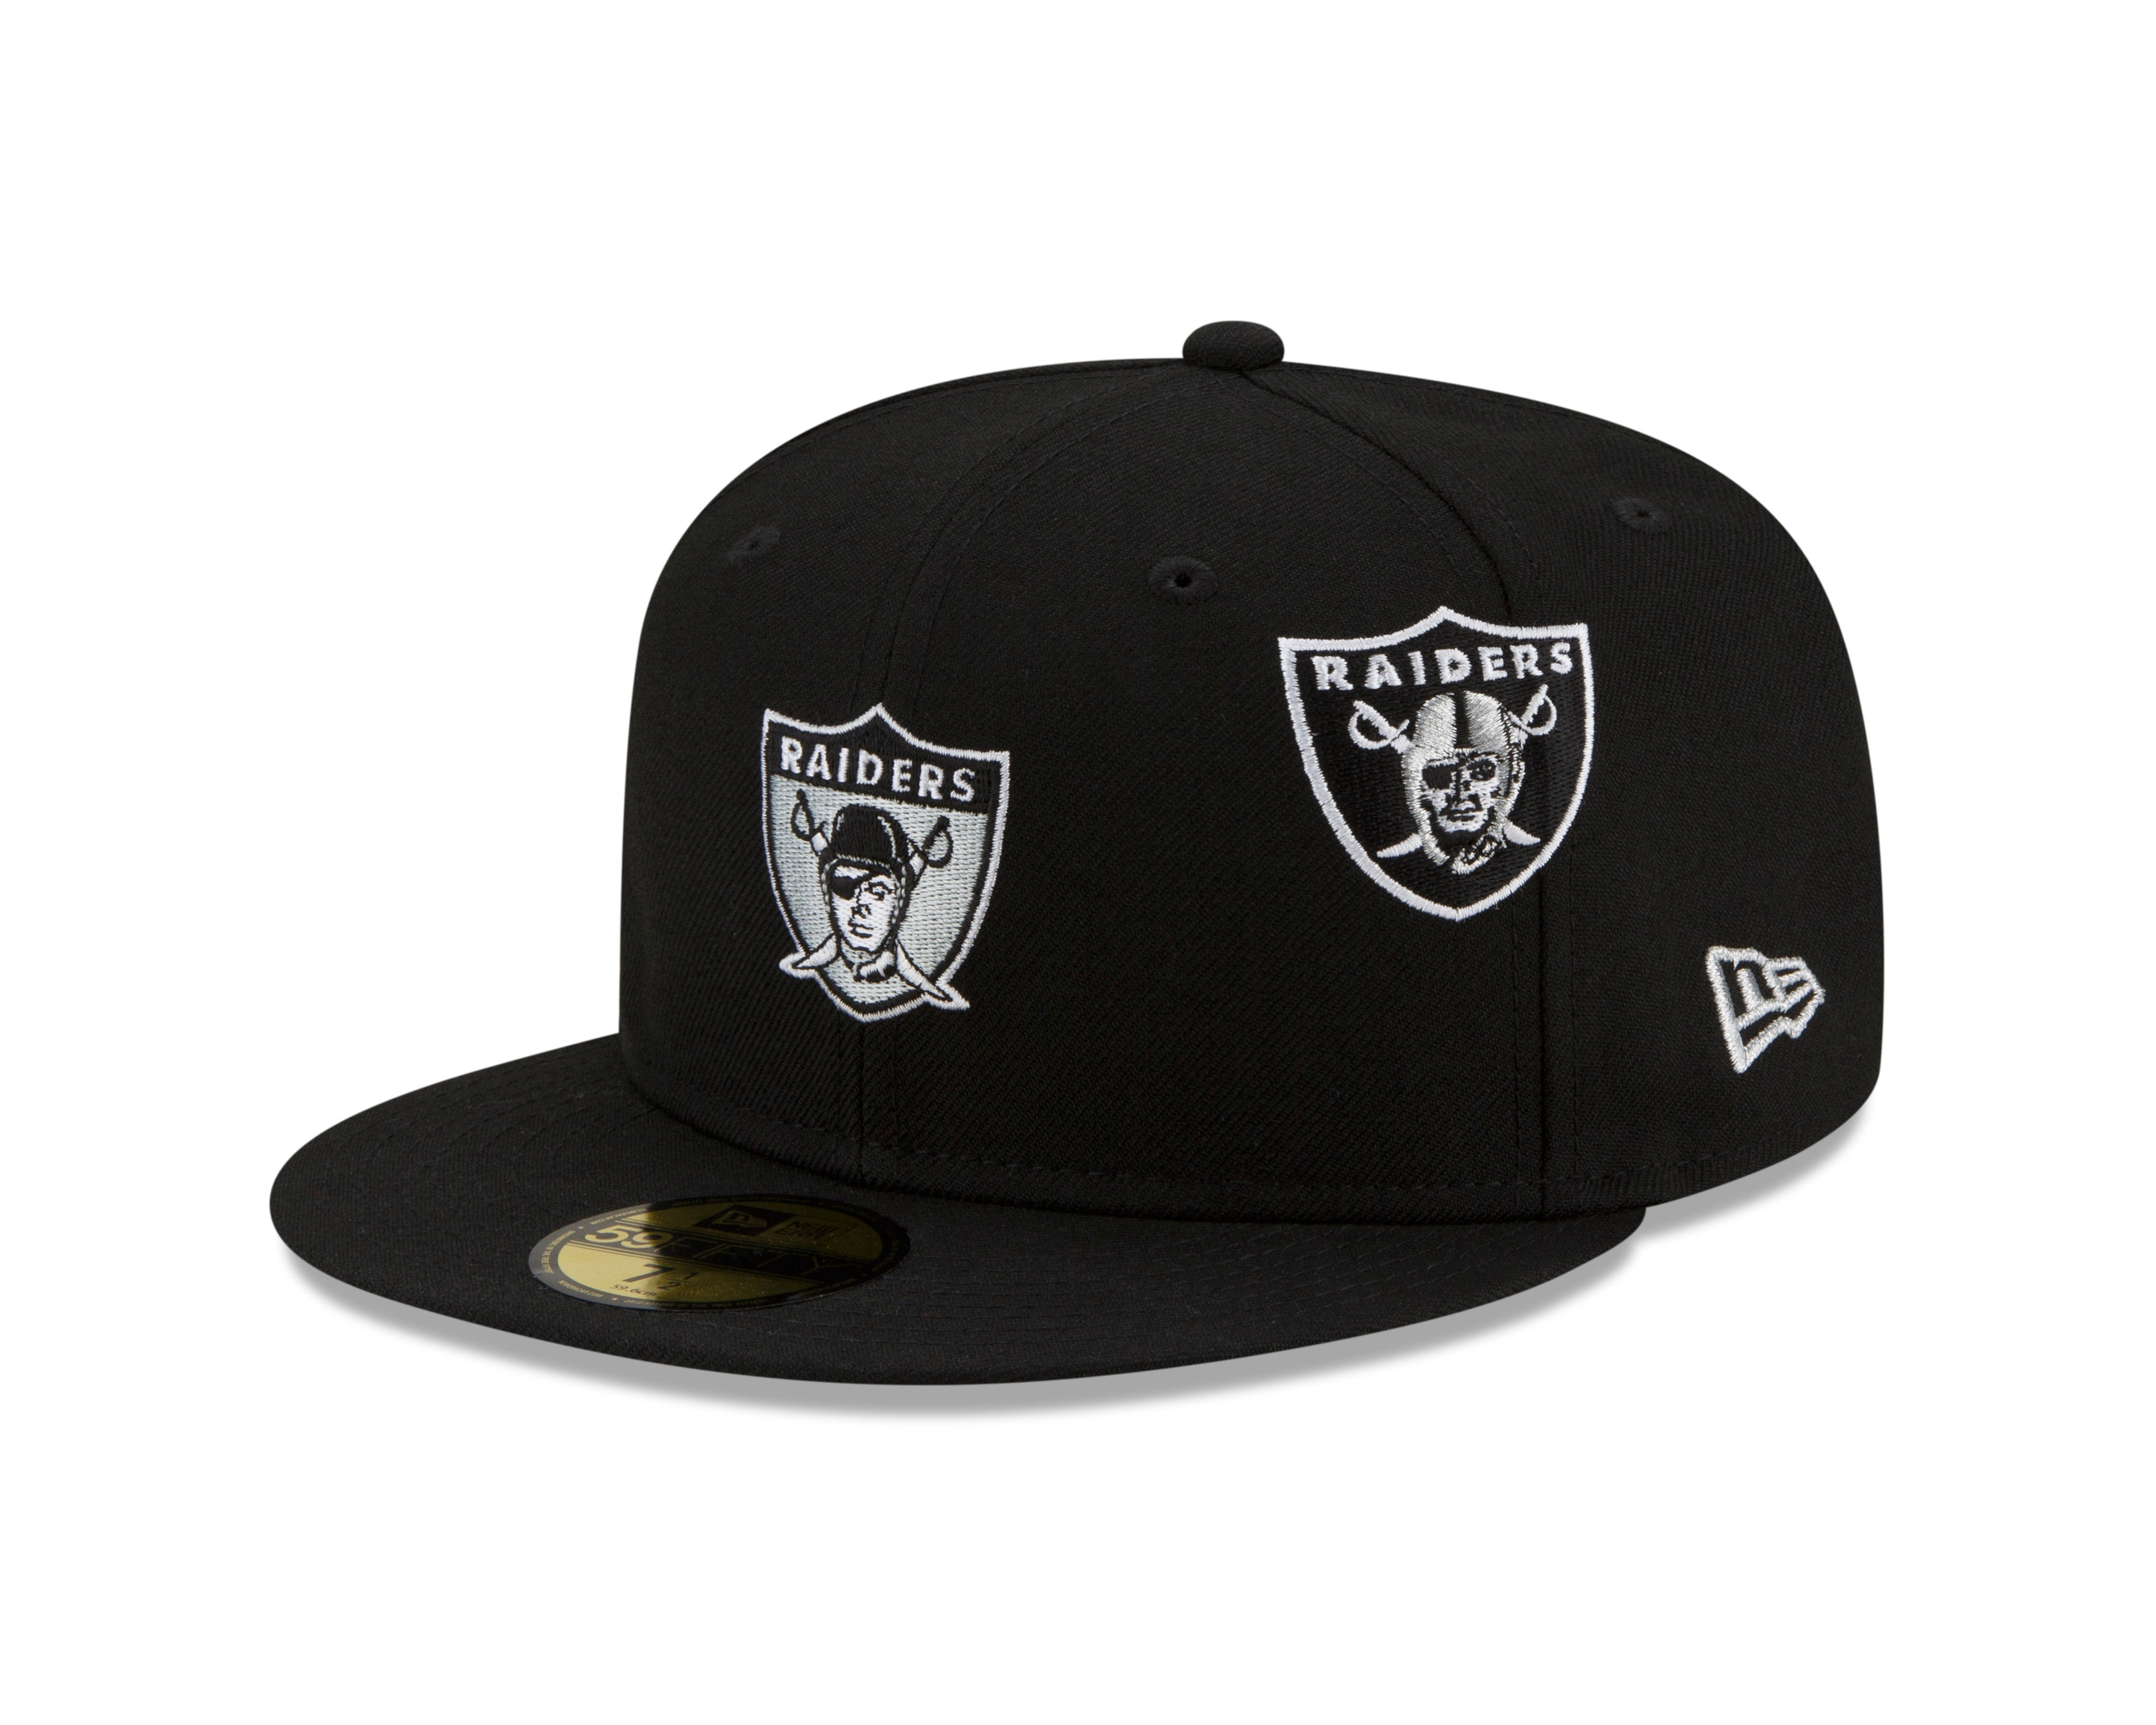 Las Vegas Raiders Nation New Era Team Local Black Fitted Hat Cap Sz 7 3/8  NEW